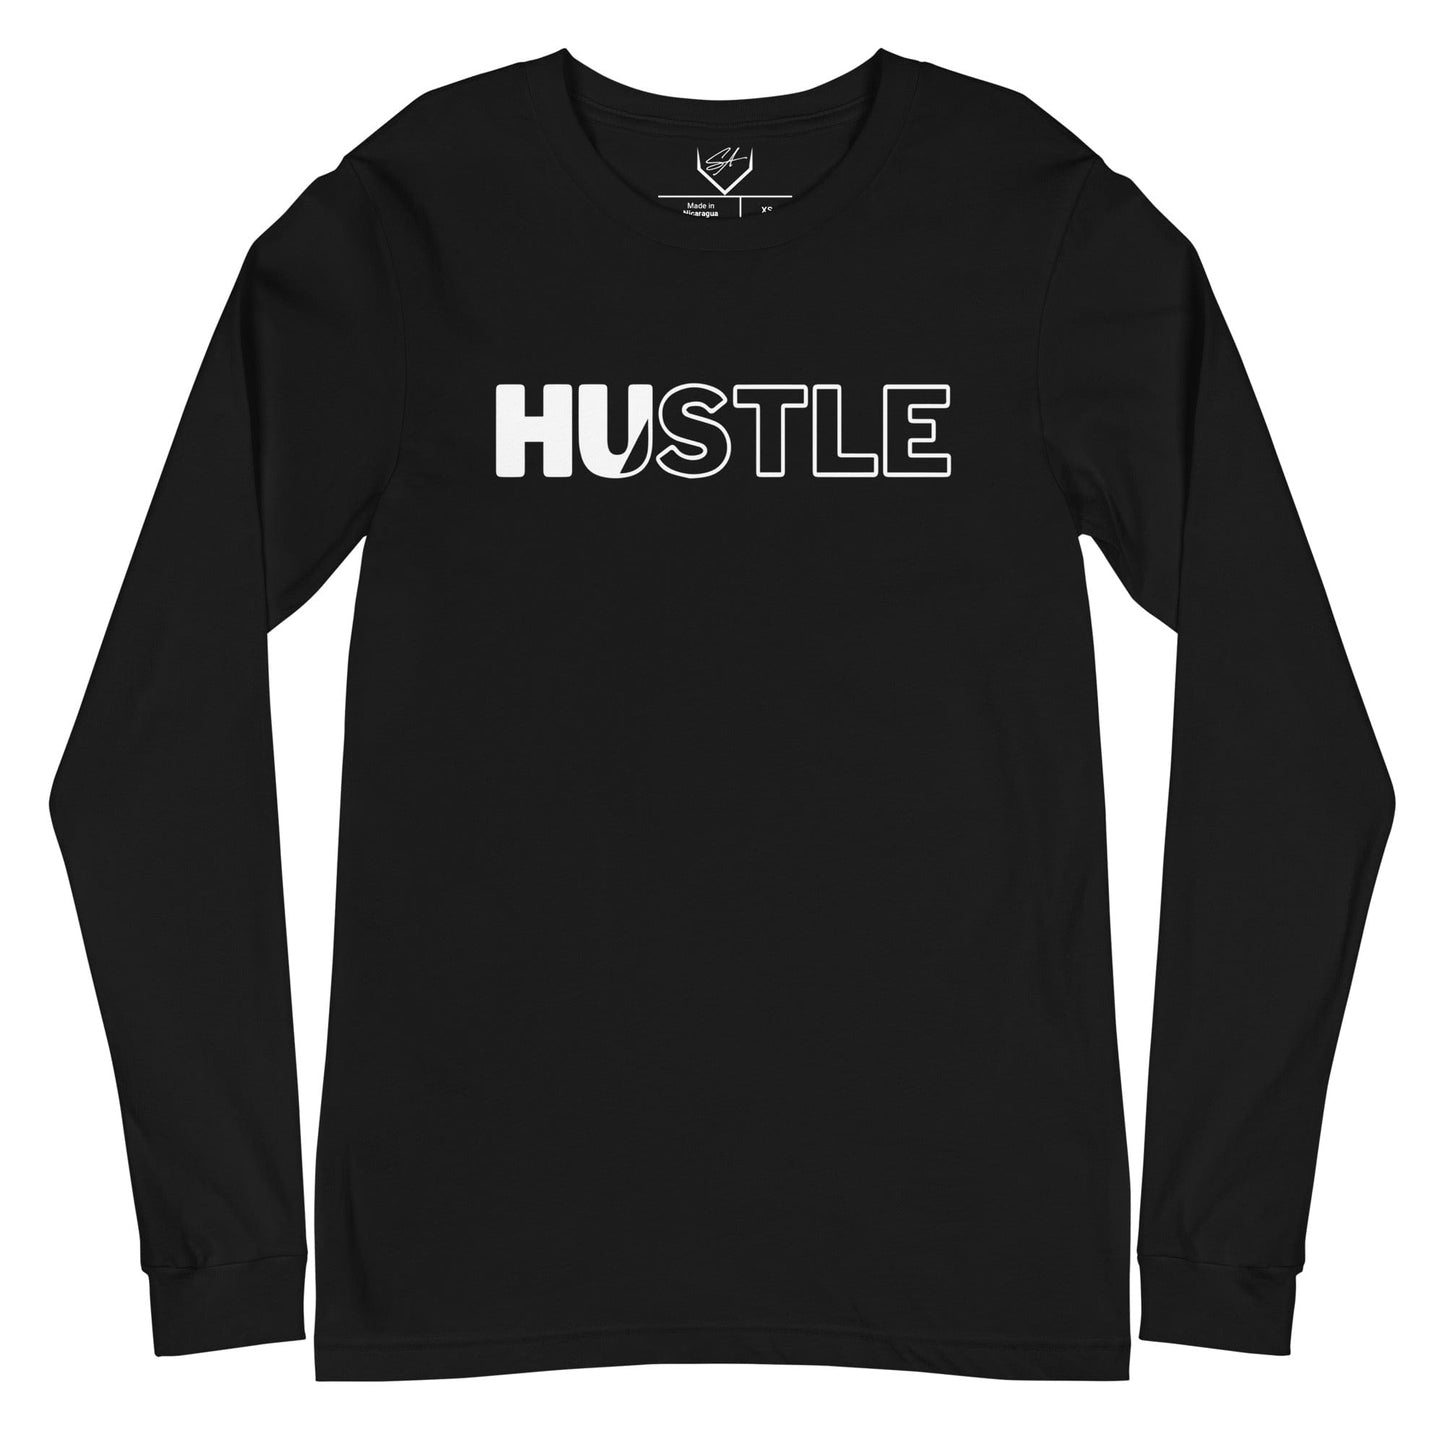 Hustle - Adult Long Sleeve